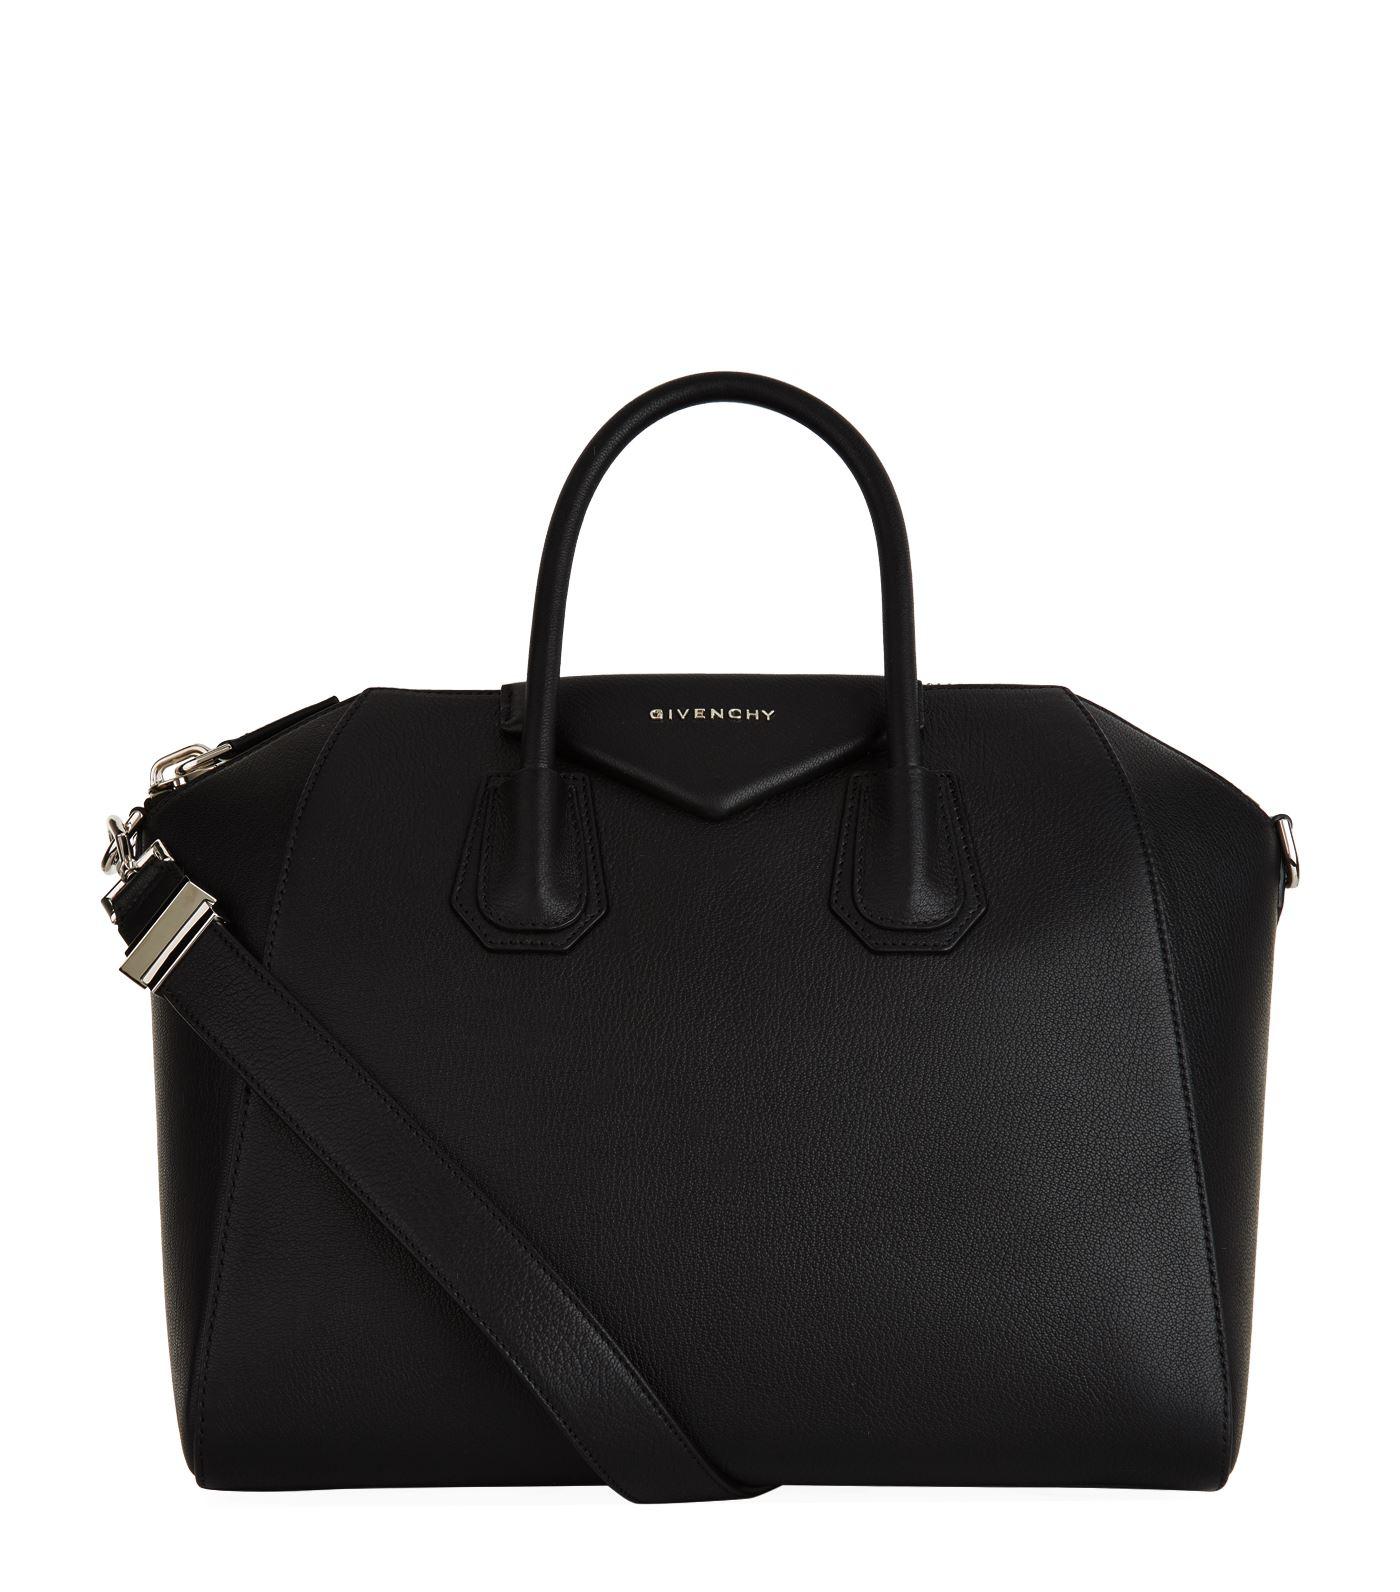 Givenchy Leather Medium Antigona Grain Tote Bag in Black - Save 8% - Lyst